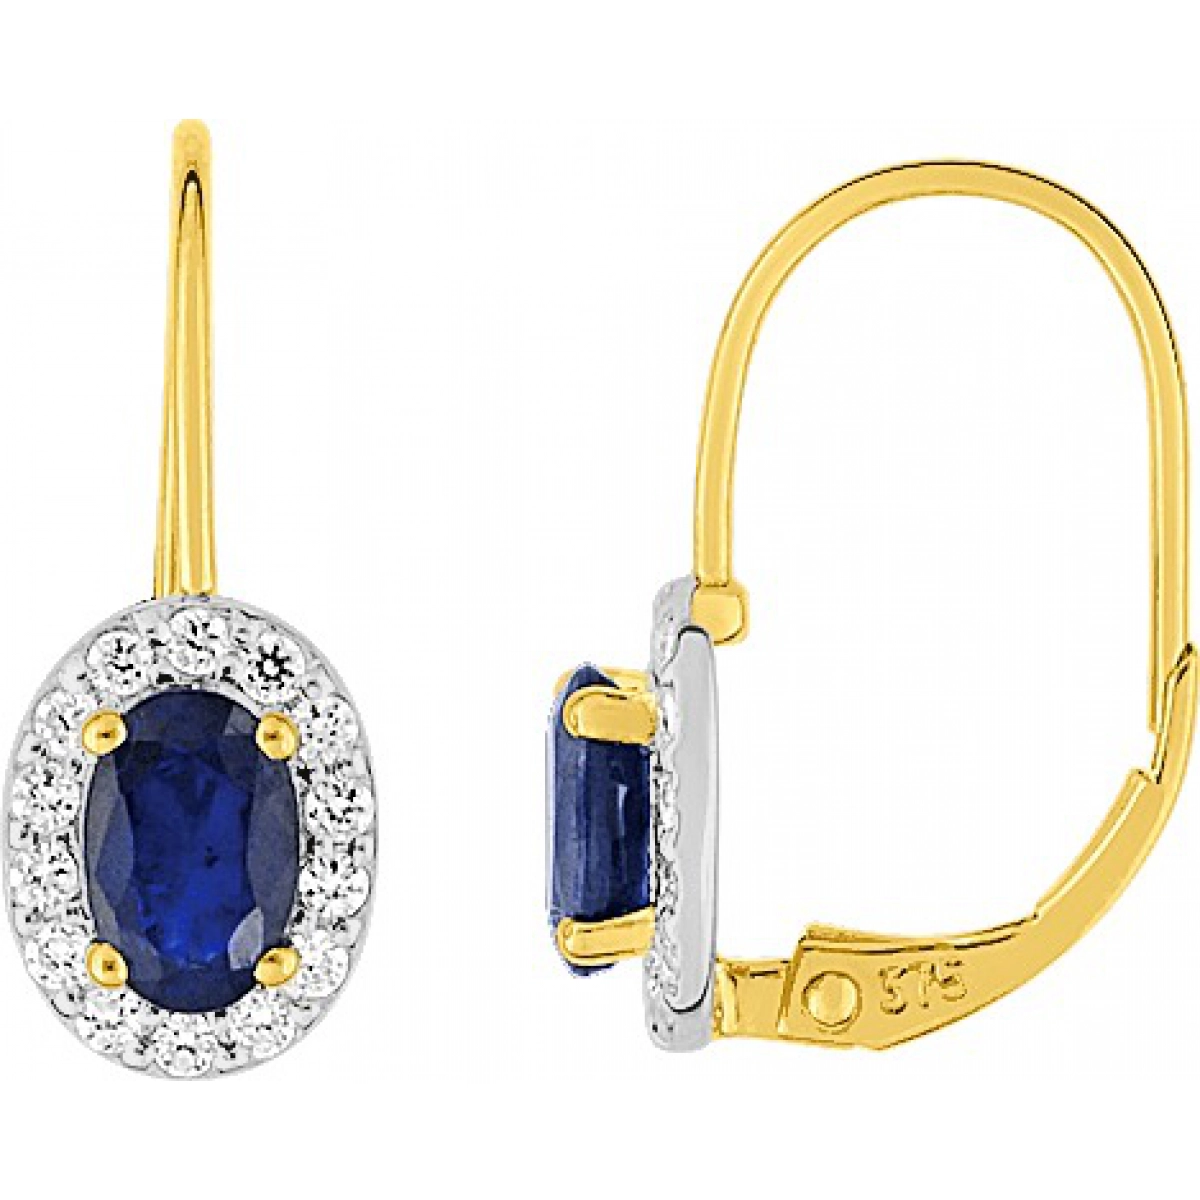 Earrings pair with sapphire + cz 9K 2TG  Lua Blanca  3PZ84BSTZ.0